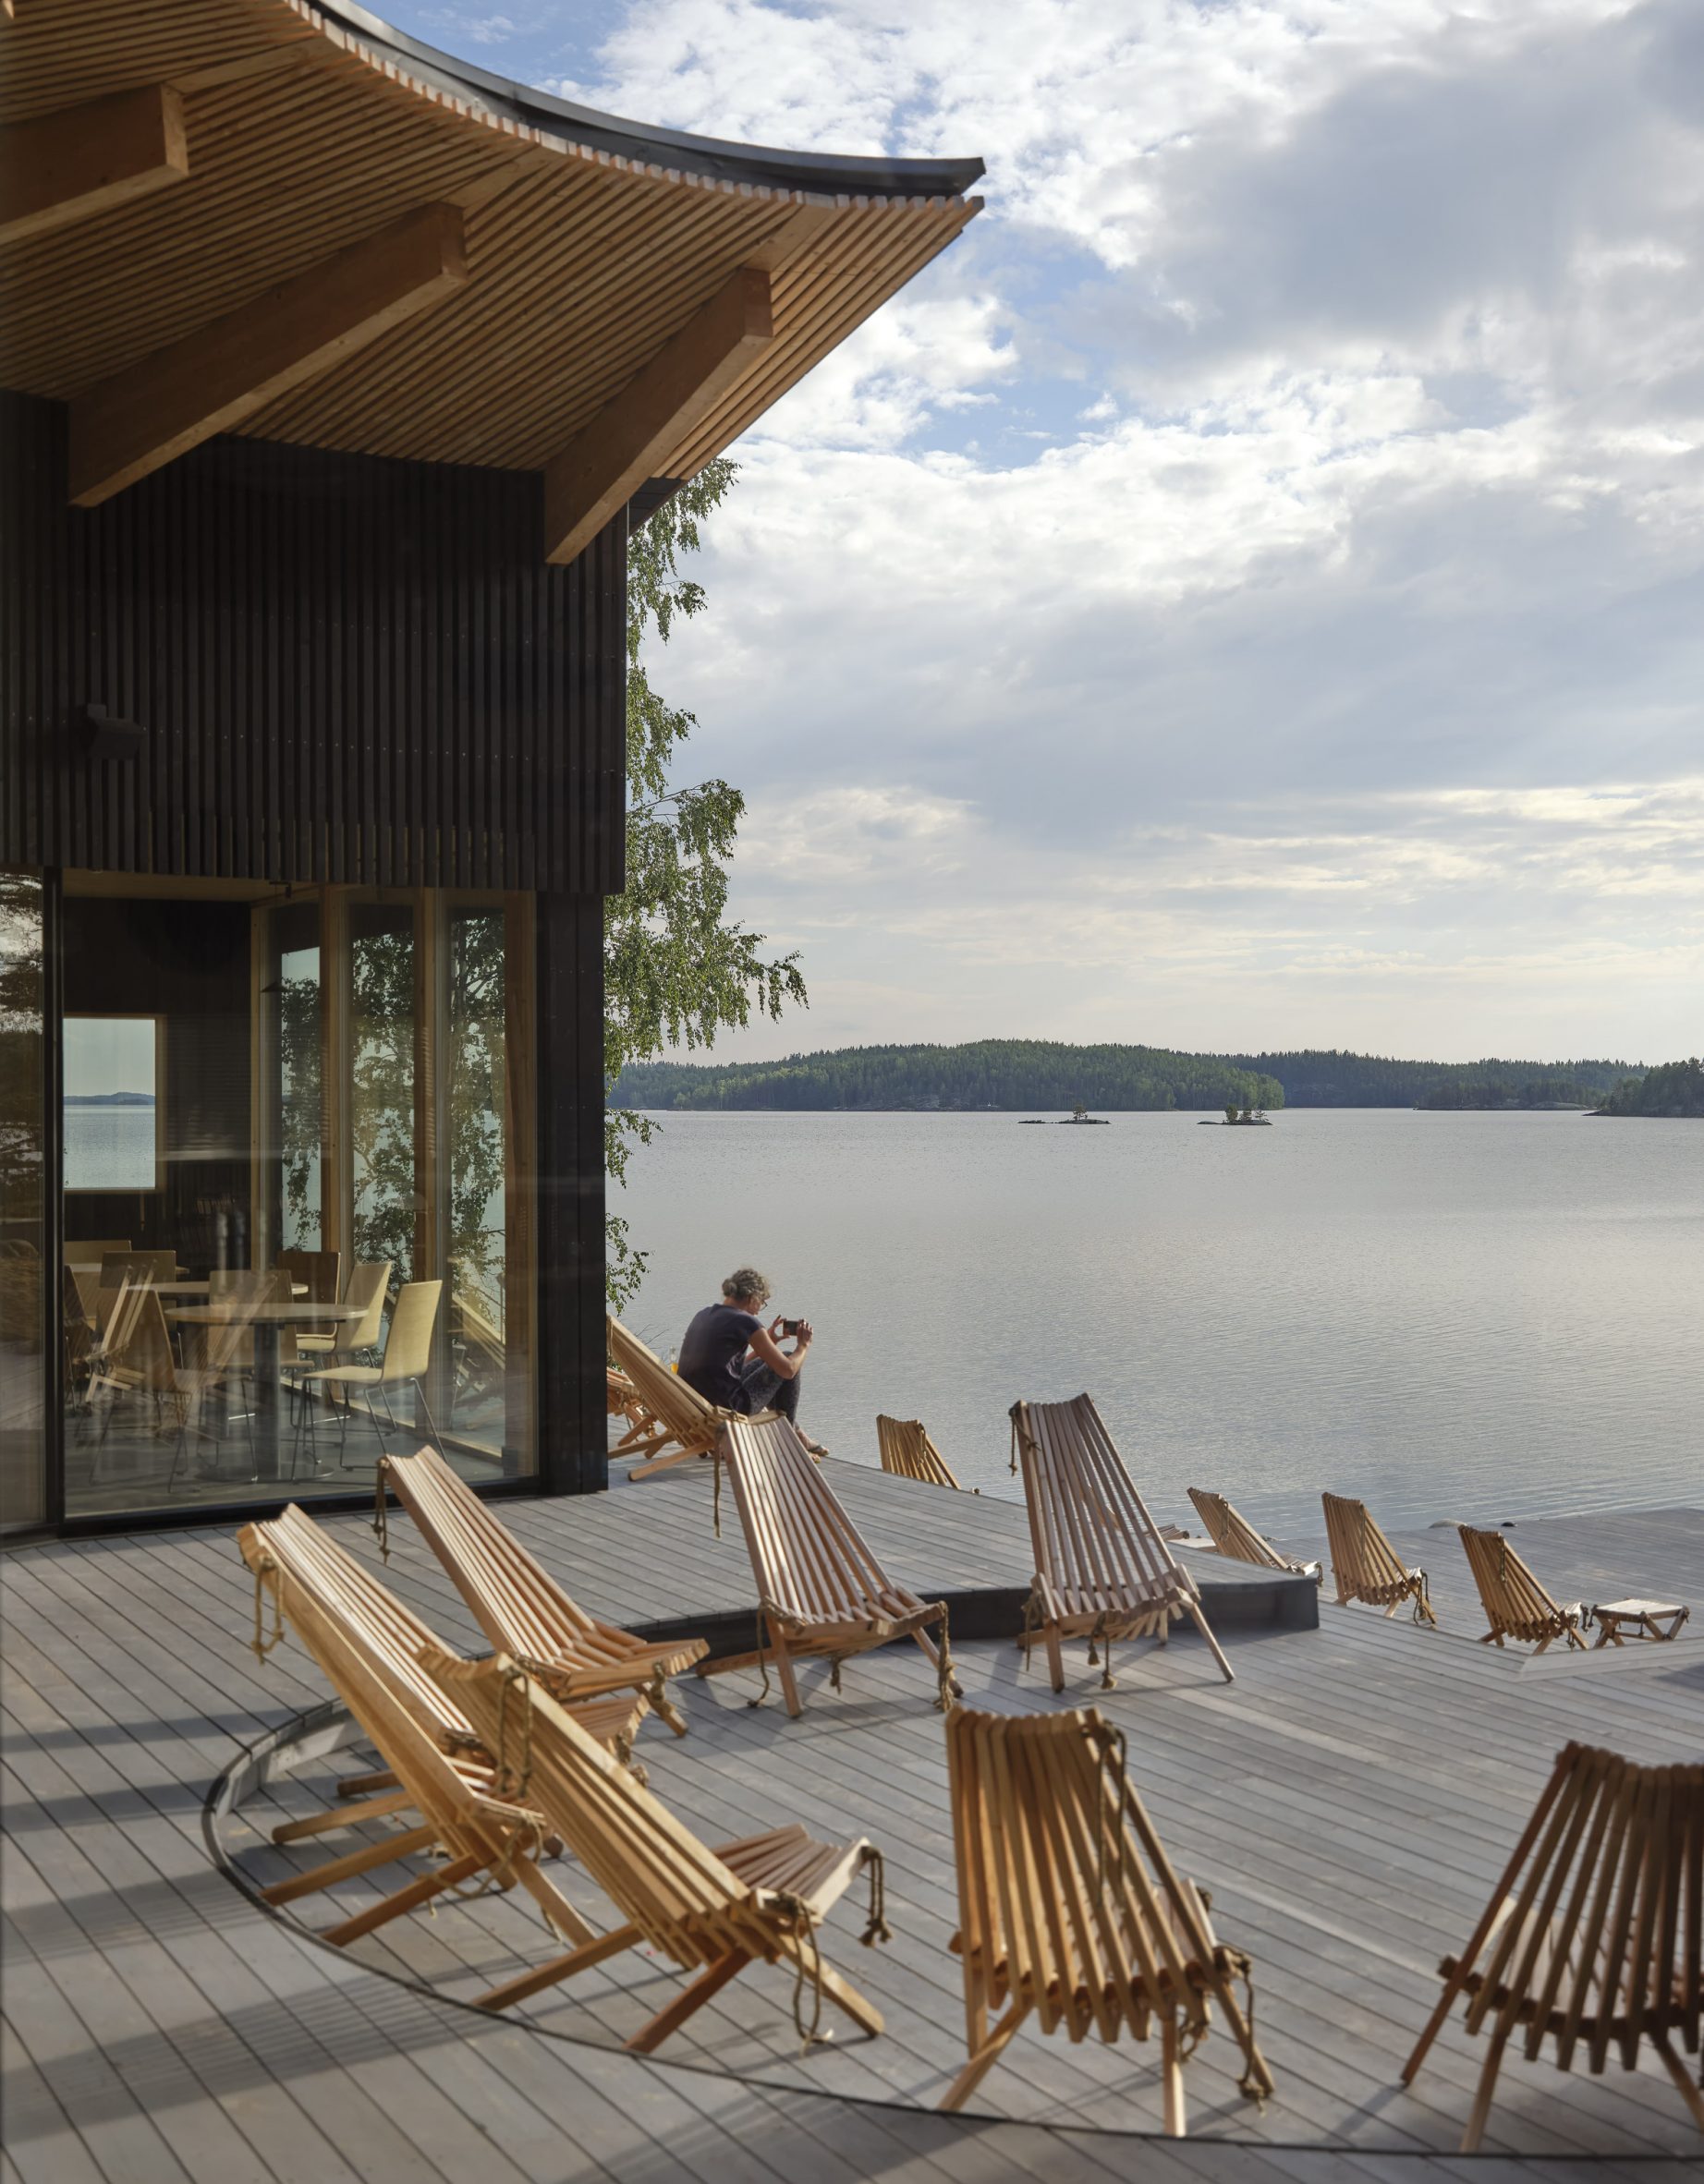 Terrace of lakeside restaurant in Finland